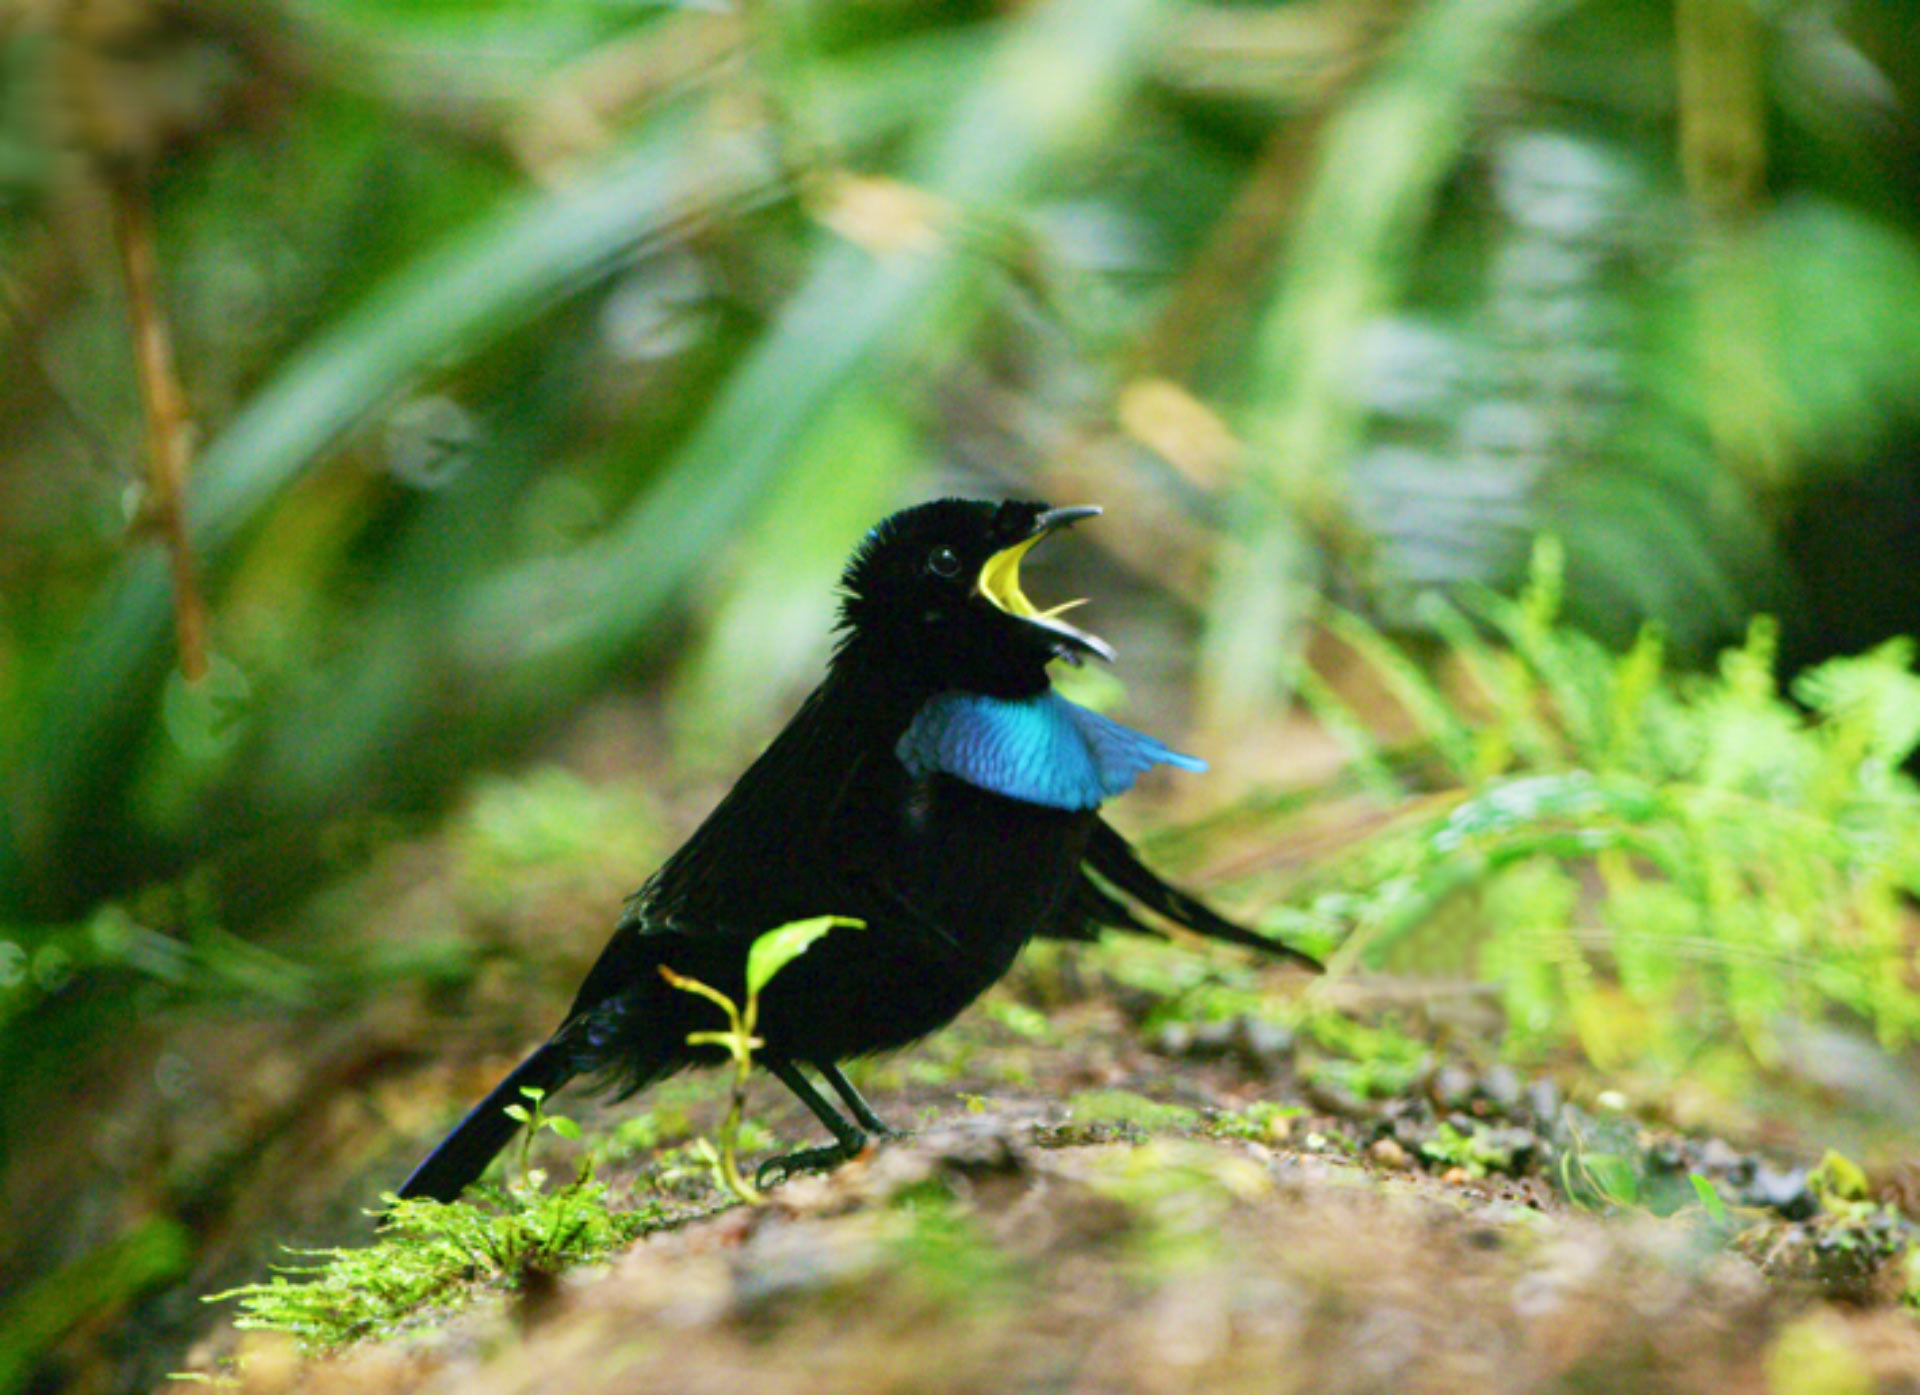 Vogelkop Superb Bird-of-Paradise Confirmed as New Species | Biology ...